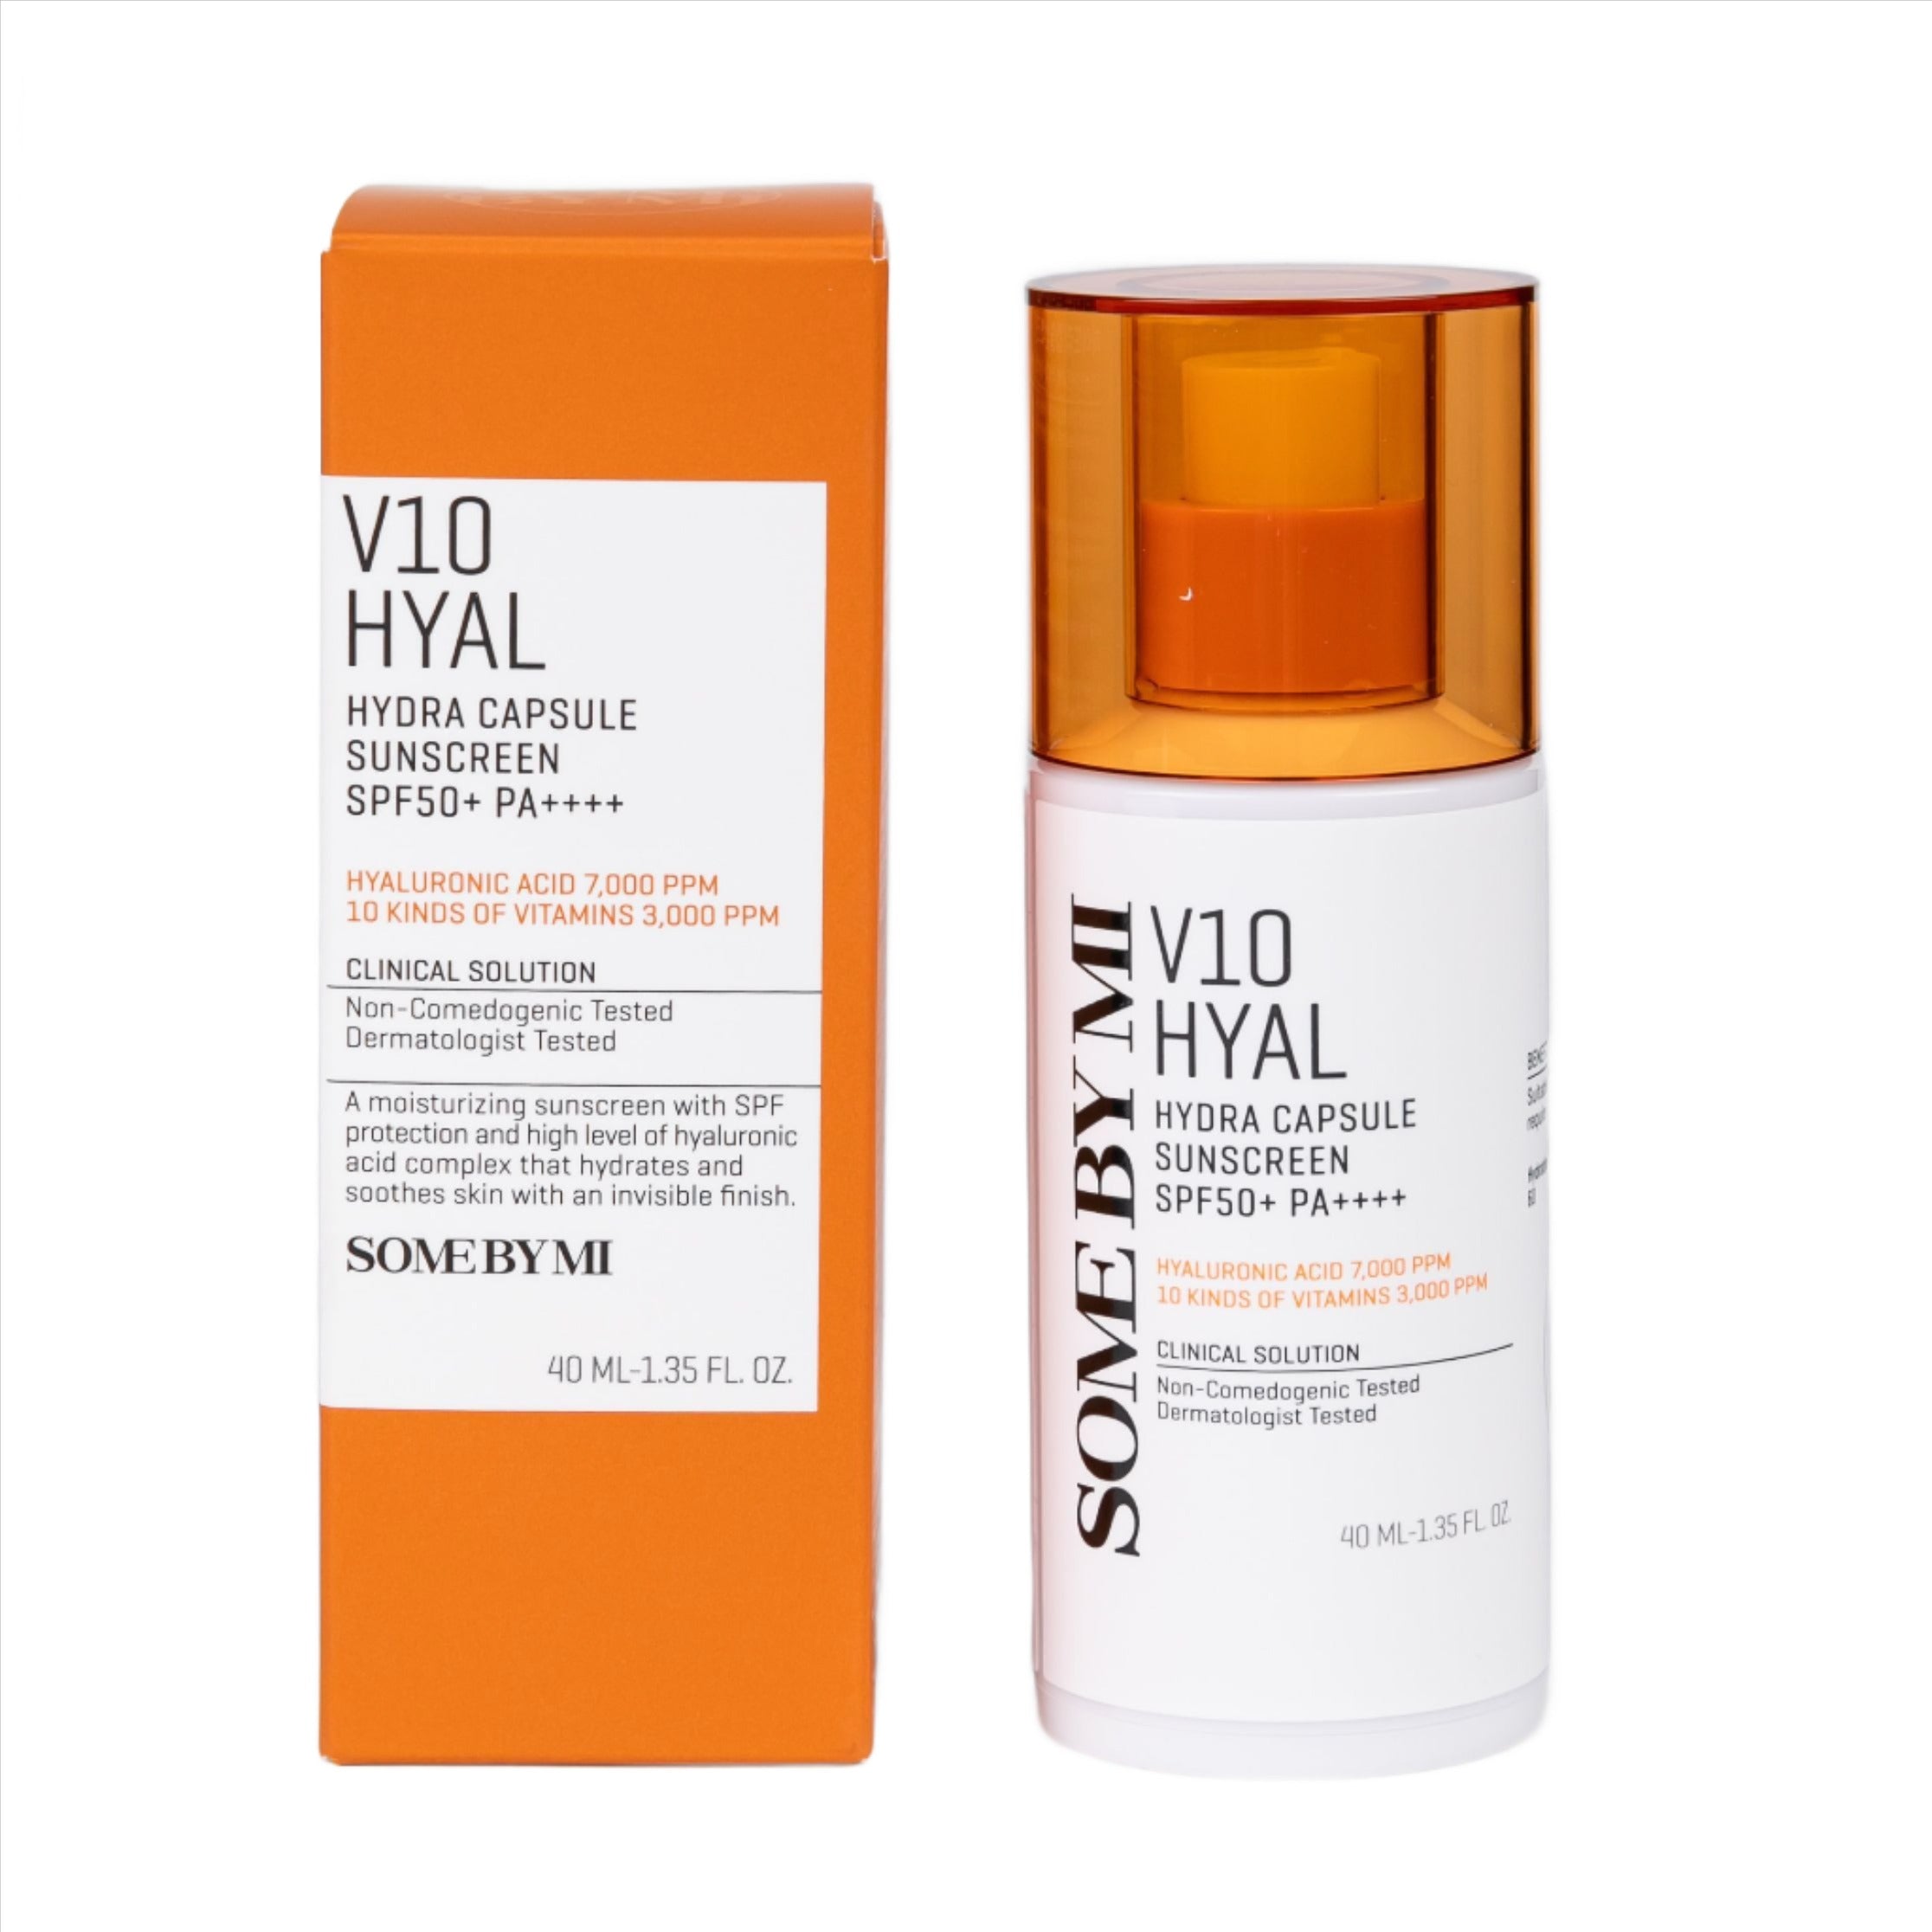 SOME BY MI V10 HYAL Hydra Capsule Sunscreen SPF50+ PA++++ 40ml